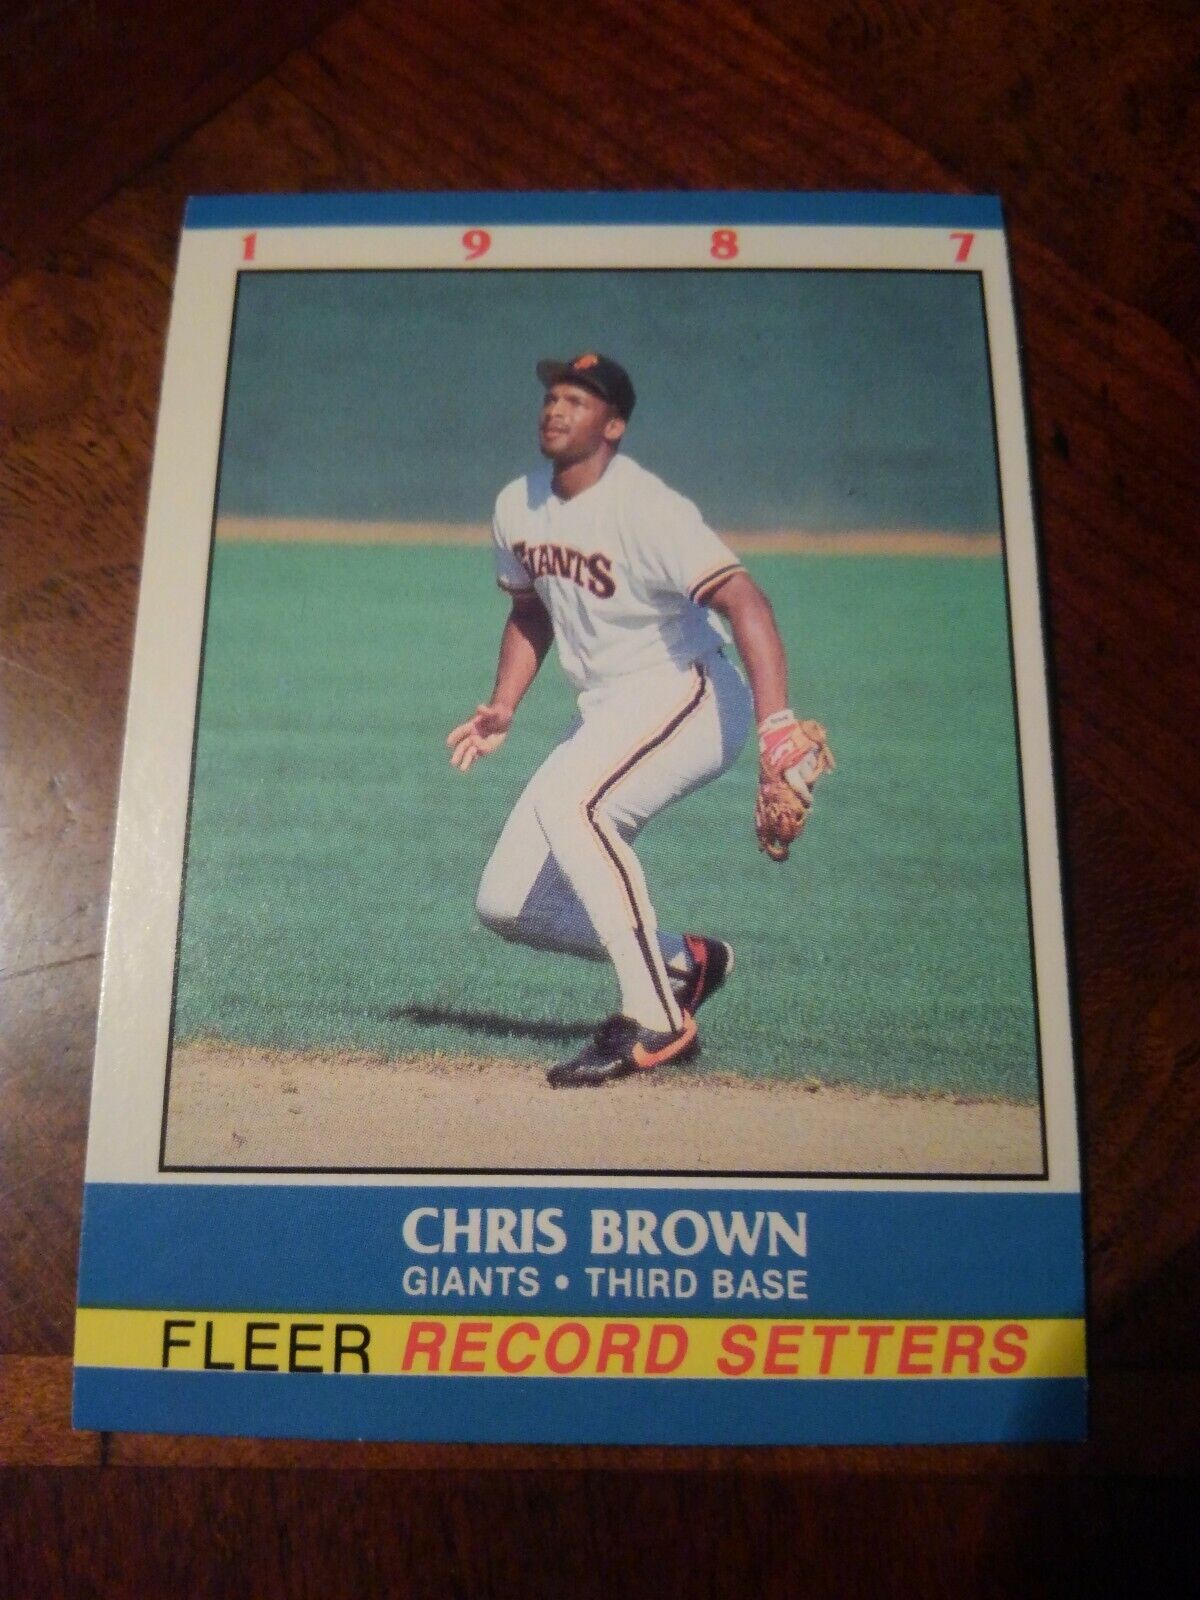 CHRIS BROWN 1987 FLEER RECORD SETTERS #2 OF 44 